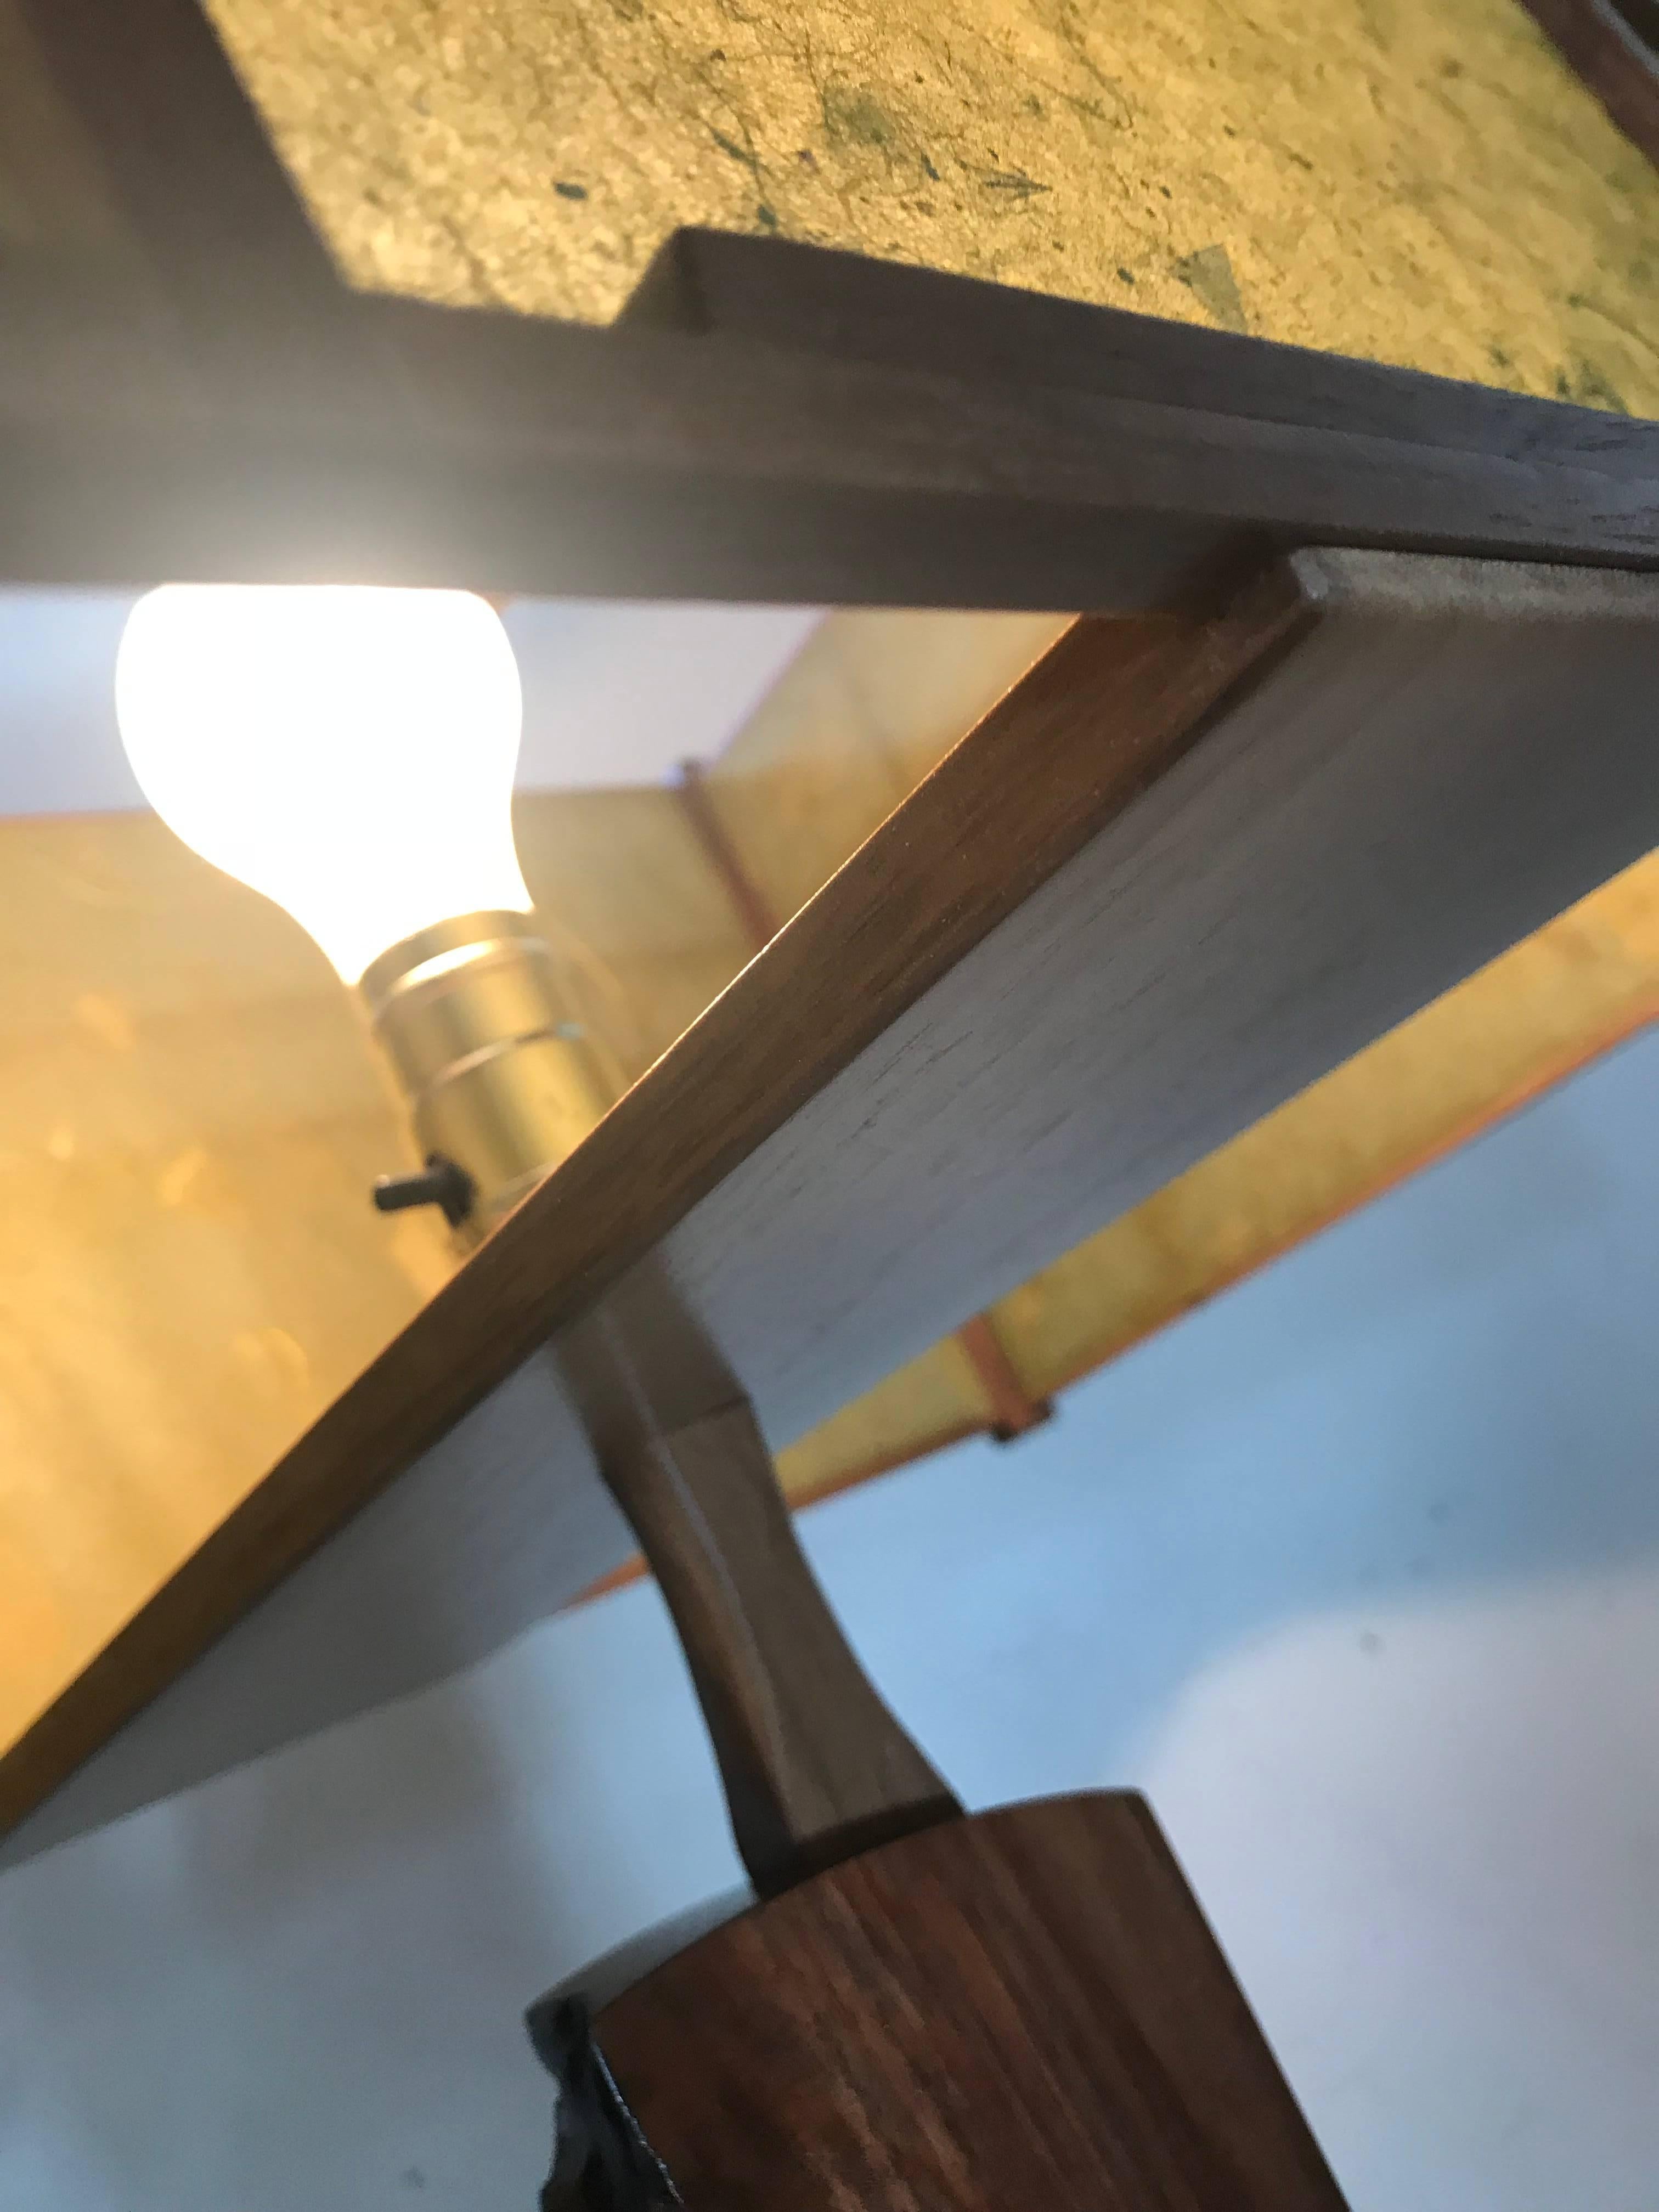 Griff Logan Workshop Studio Bench Made Free Edge Table Lamp 2